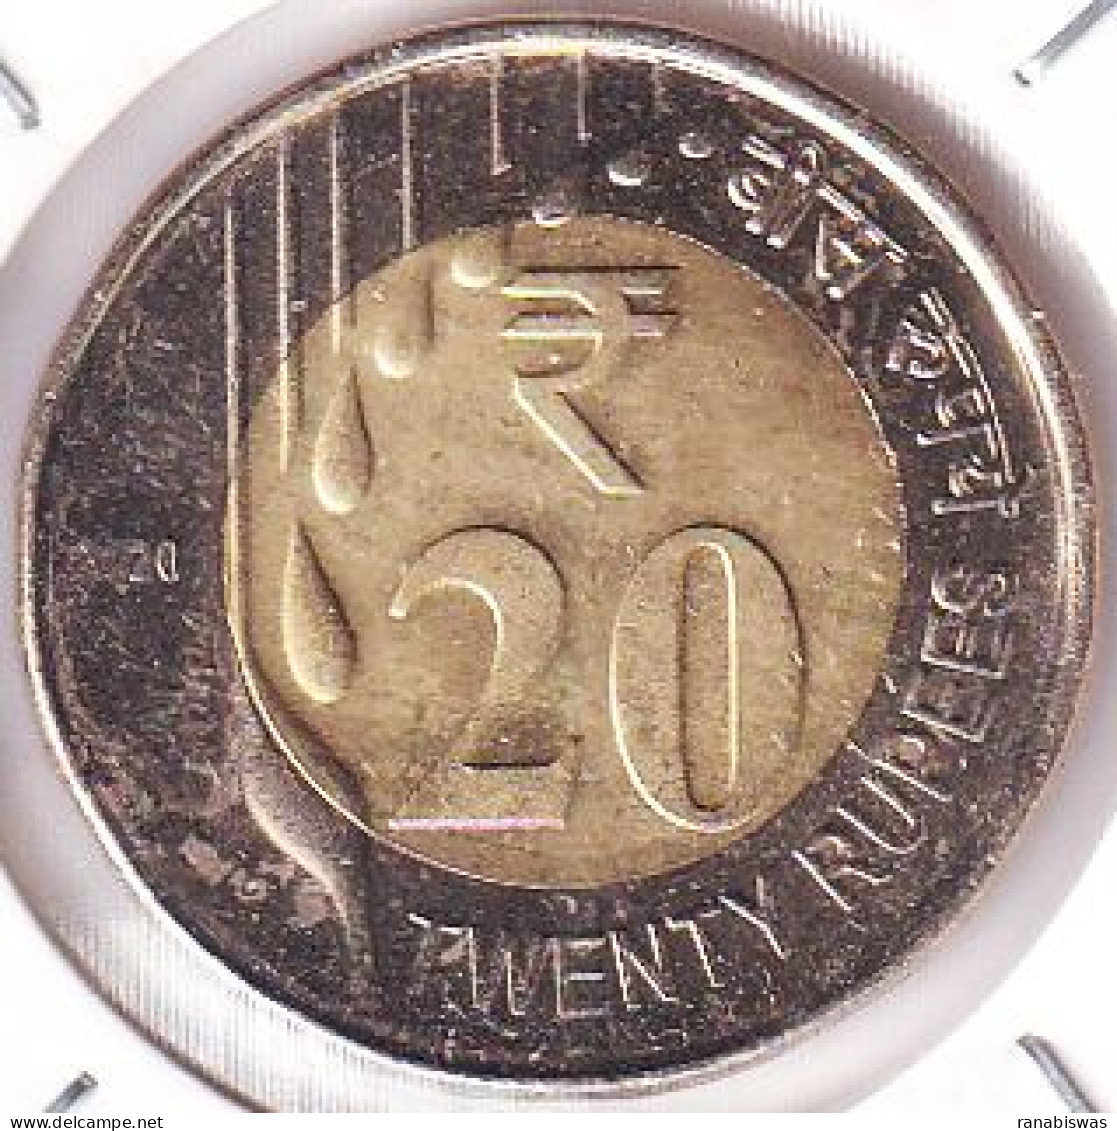 INDIA COIN LOT 439, 20 RUPEES 2020, RAIN DROPS, CALCUTTA MINT, XF - India